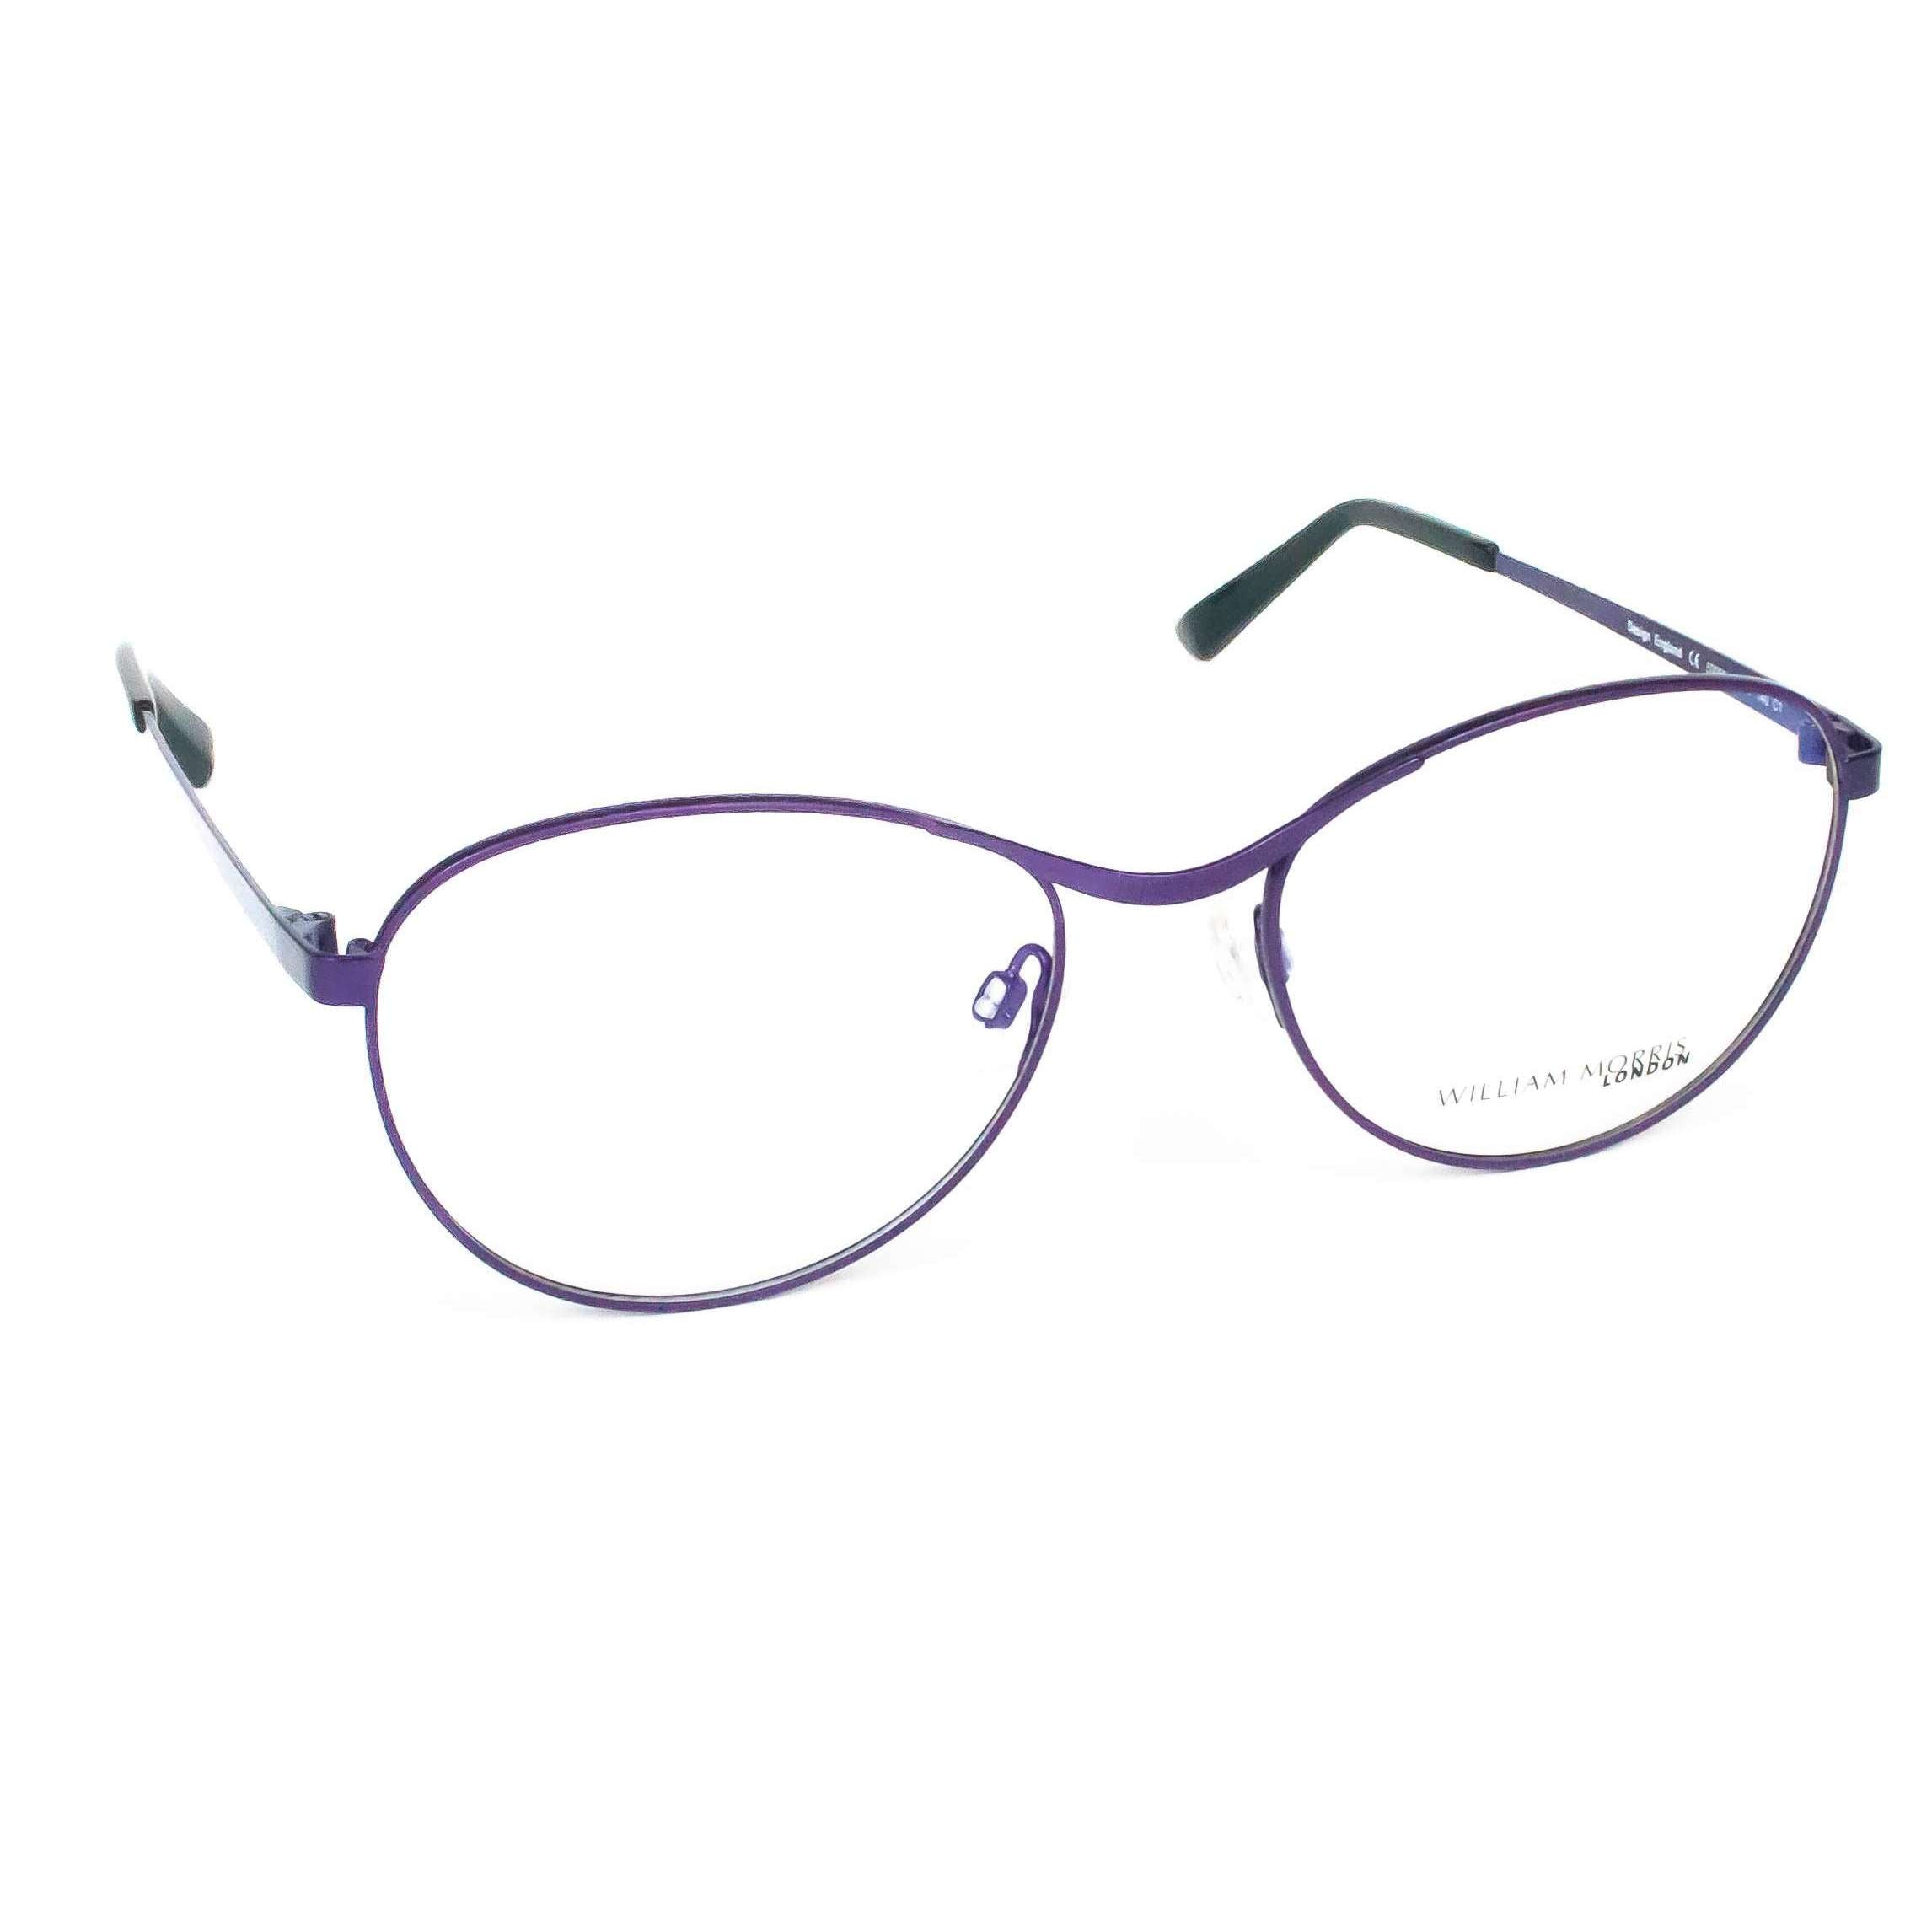 William Morris London LN50056 Purple Glasses